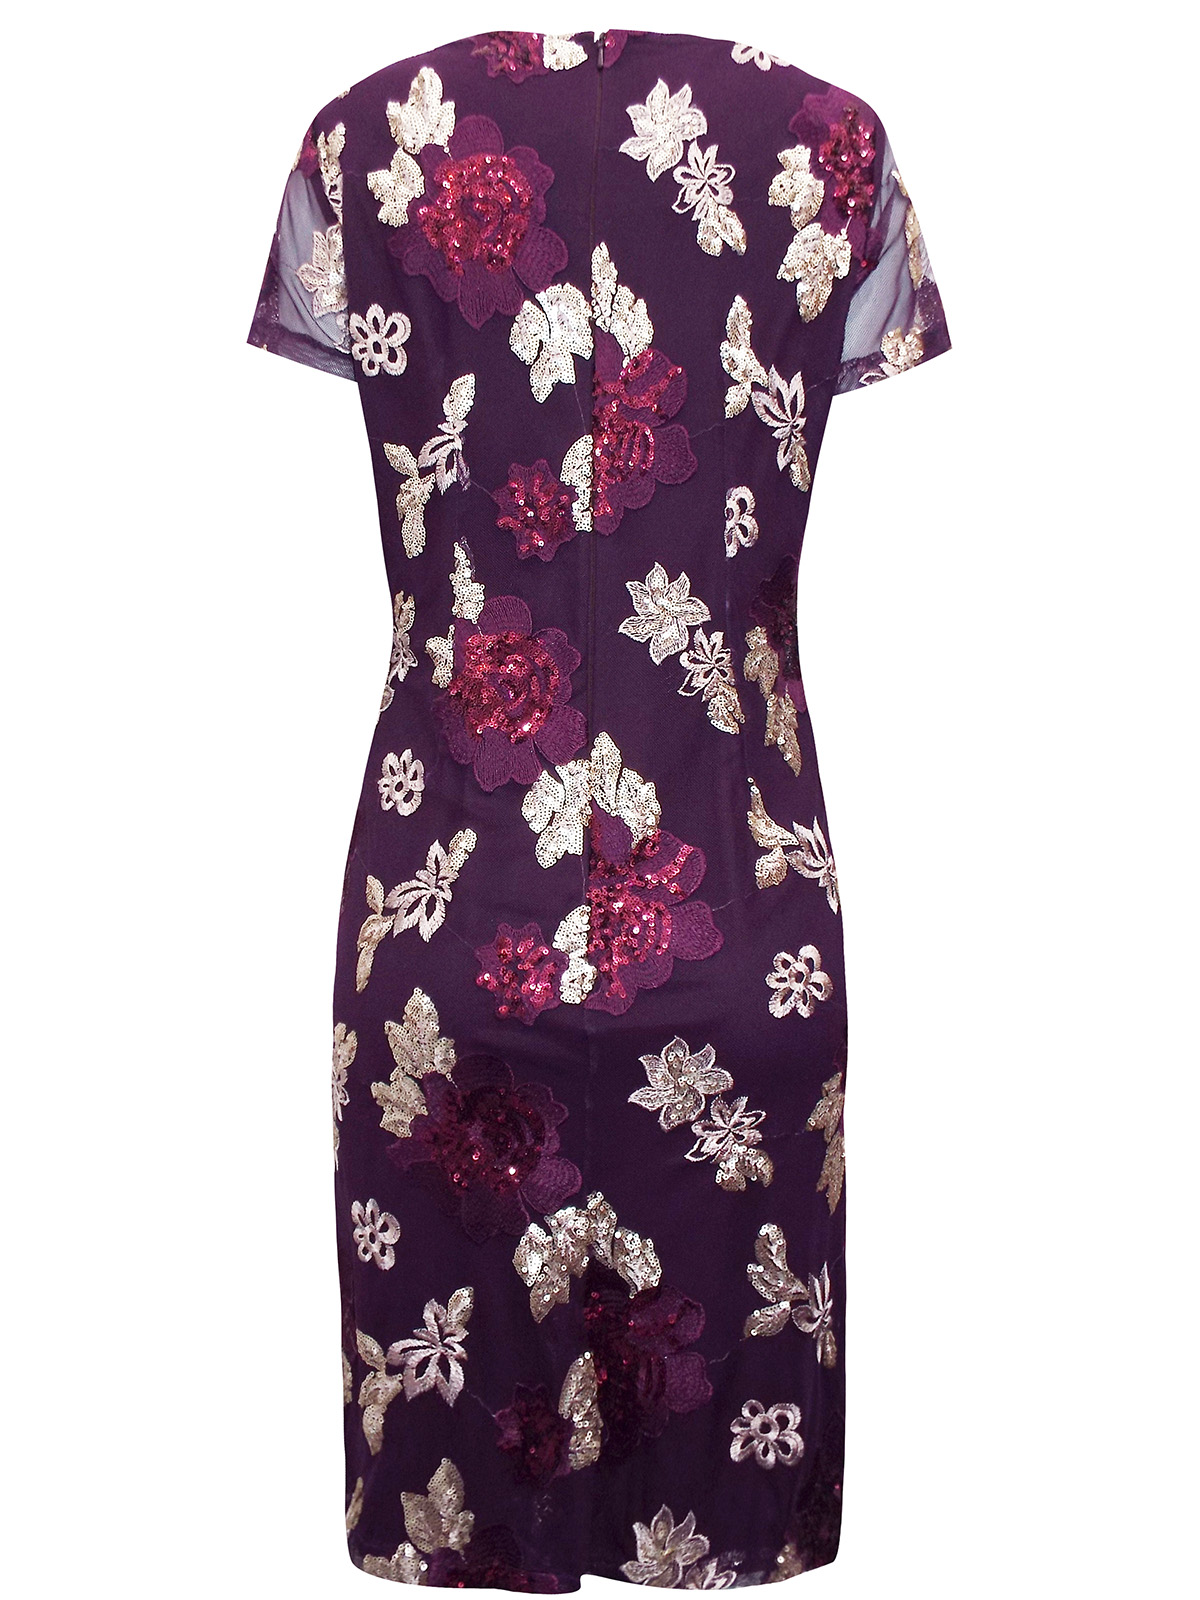 M&Co WINE Floral Sequin Embellished Shift Dress - Size 8 to 16